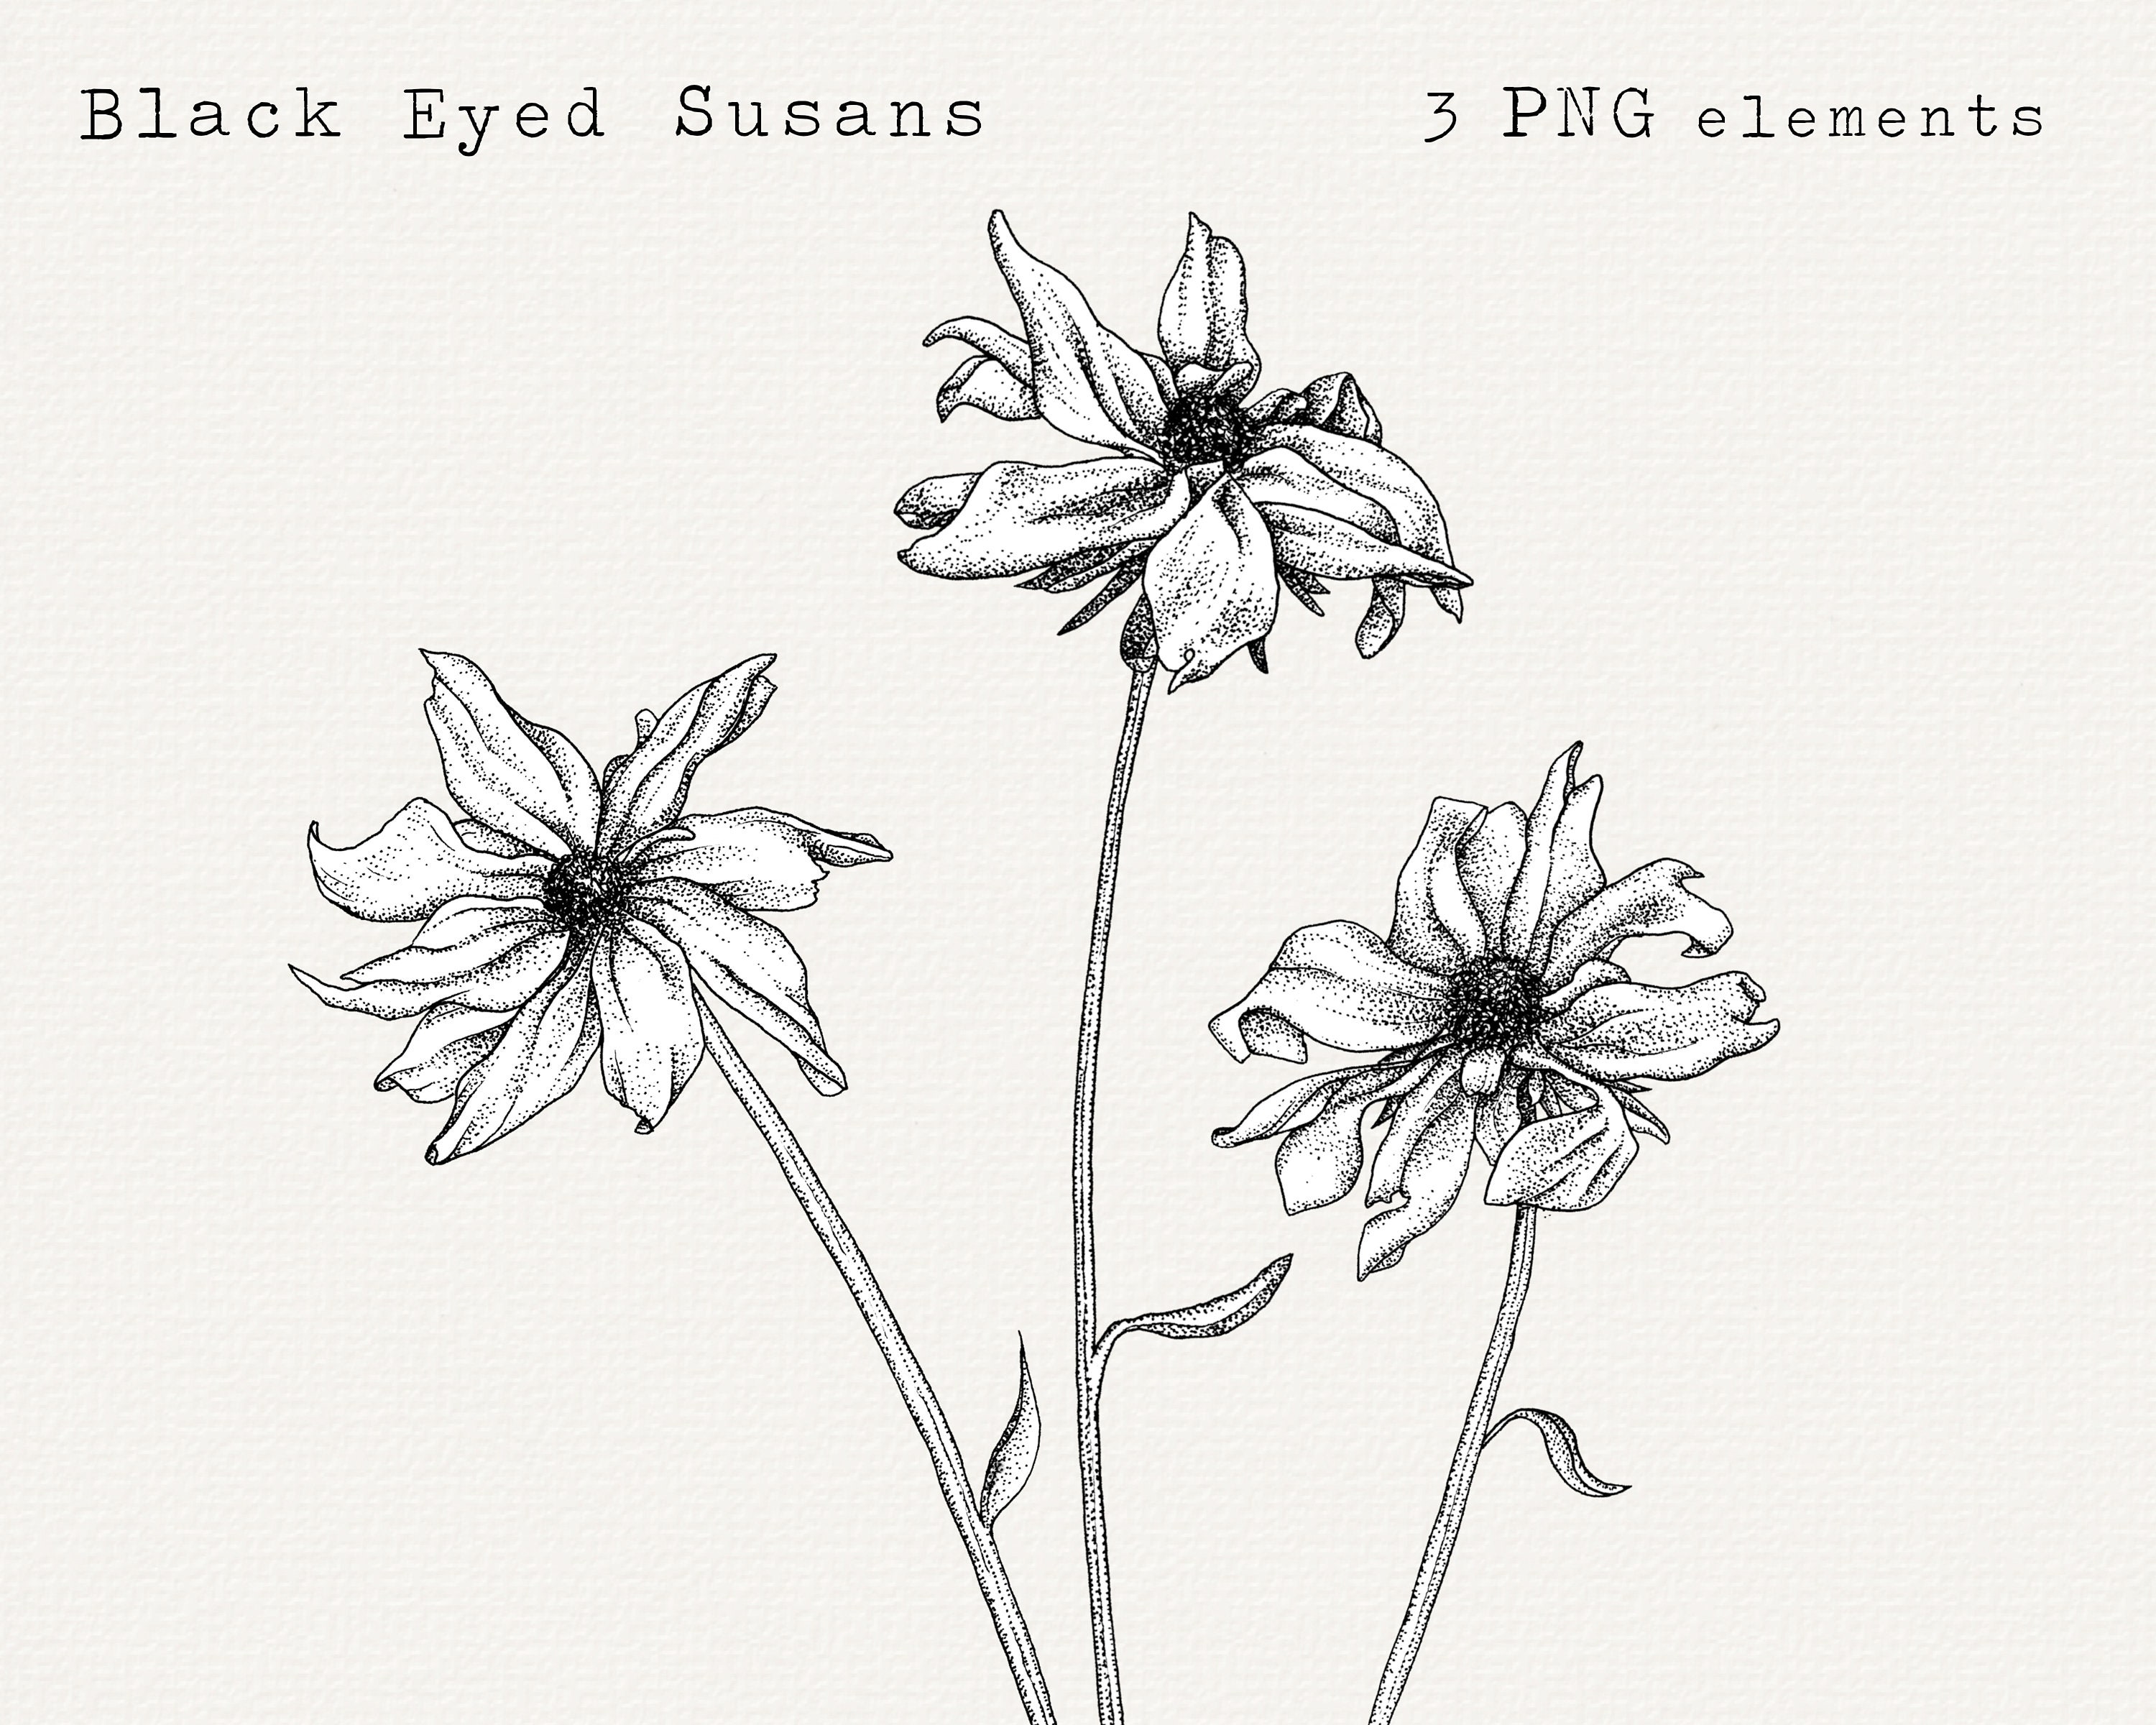 Share 75+ pen sketches of flowers - in.eteachers